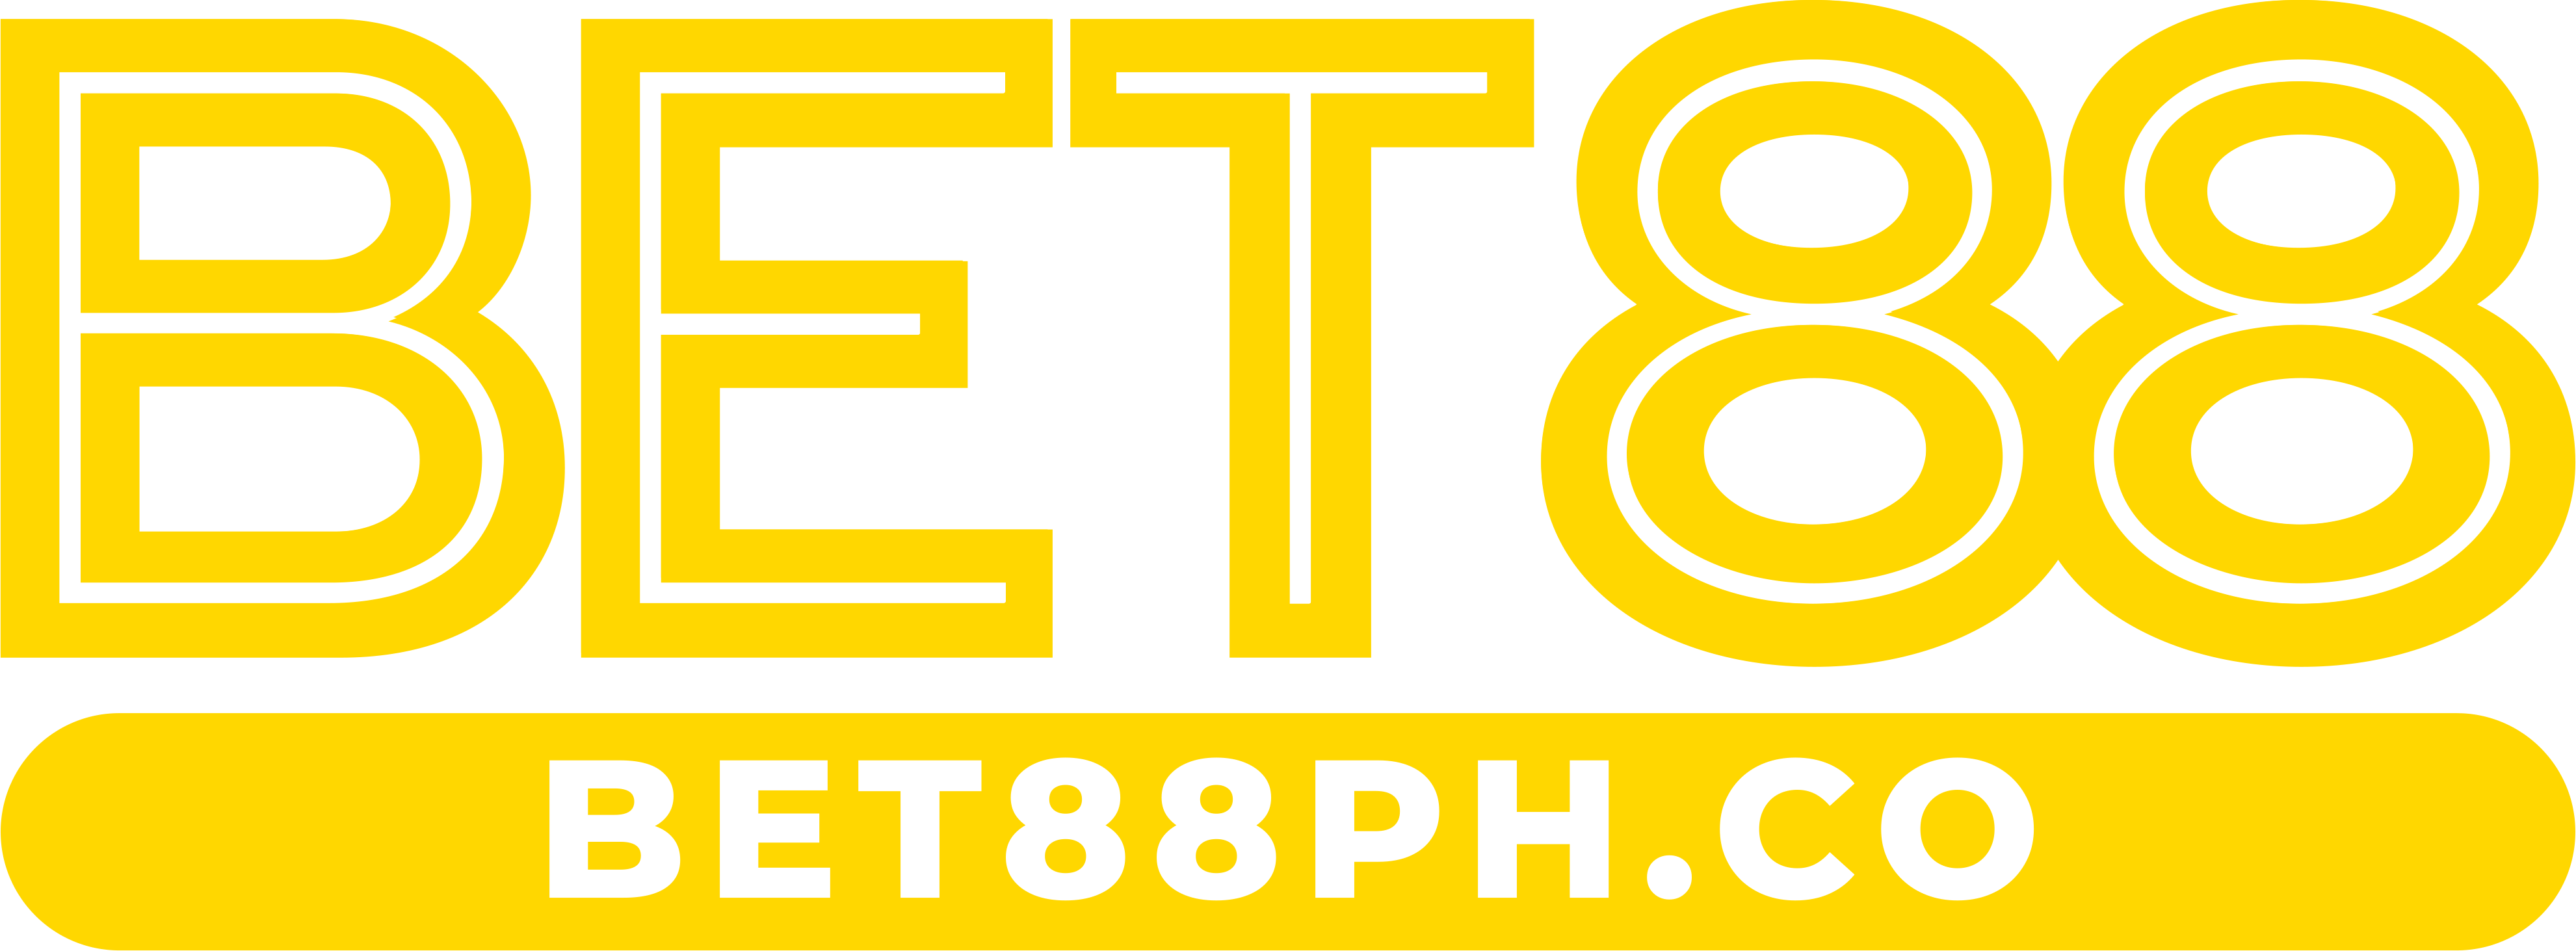 bet88 logo 2